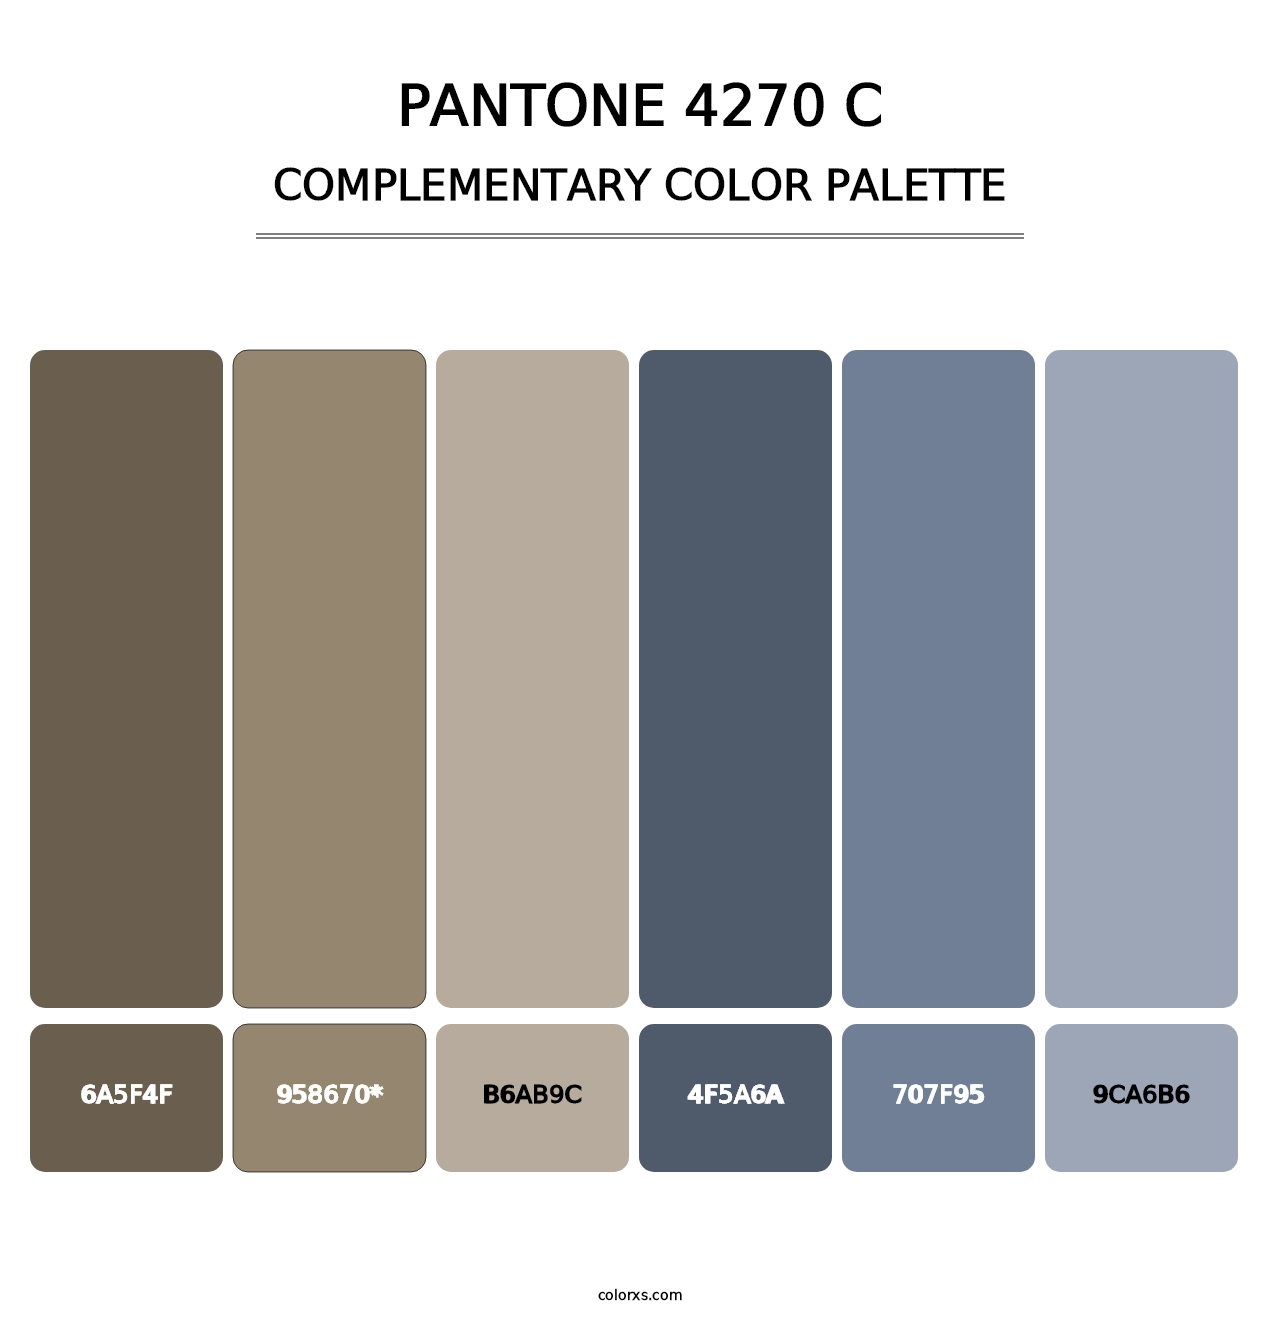 PANTONE 4270 C - Complementary Color Palette